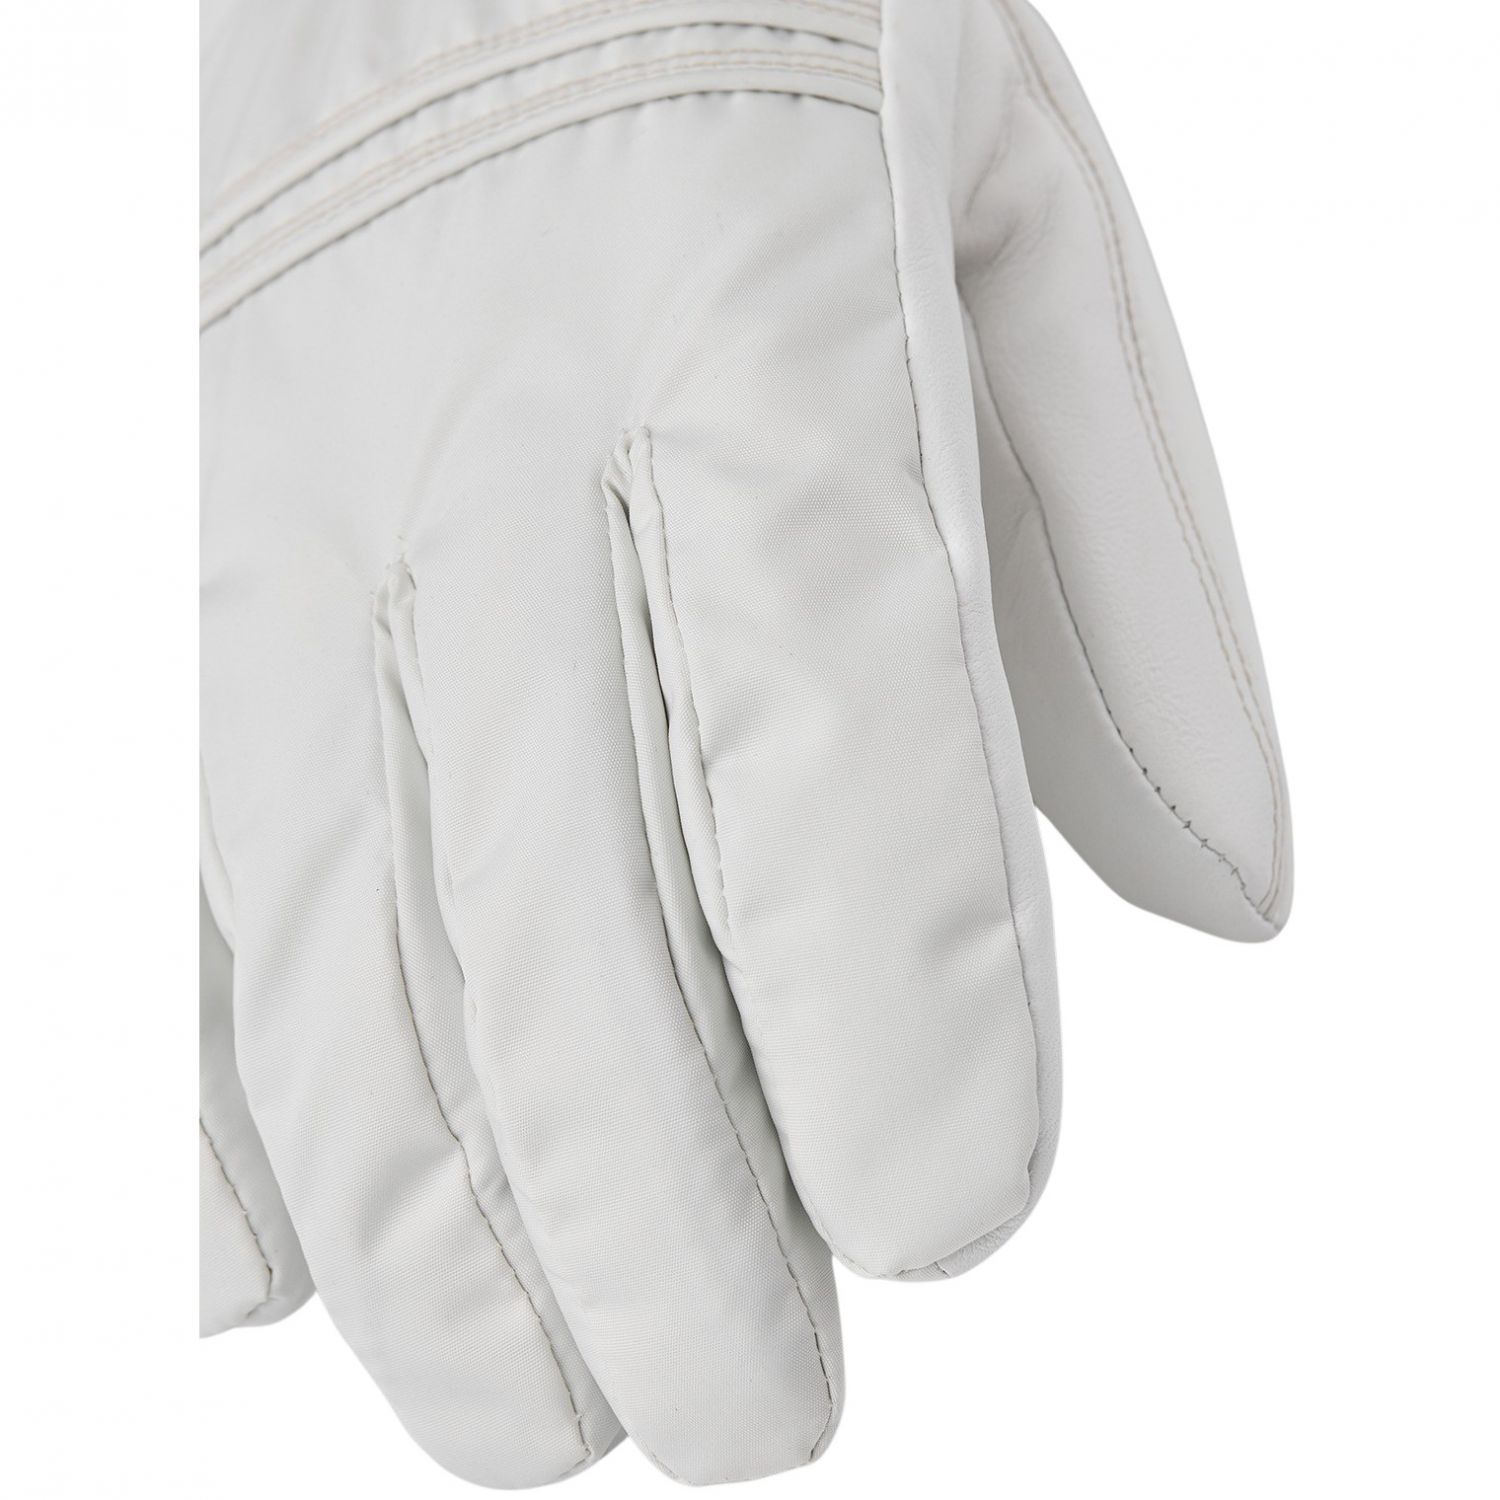 Hestra Primaloft Leather, gants de ski, femmes, blanc/blanc